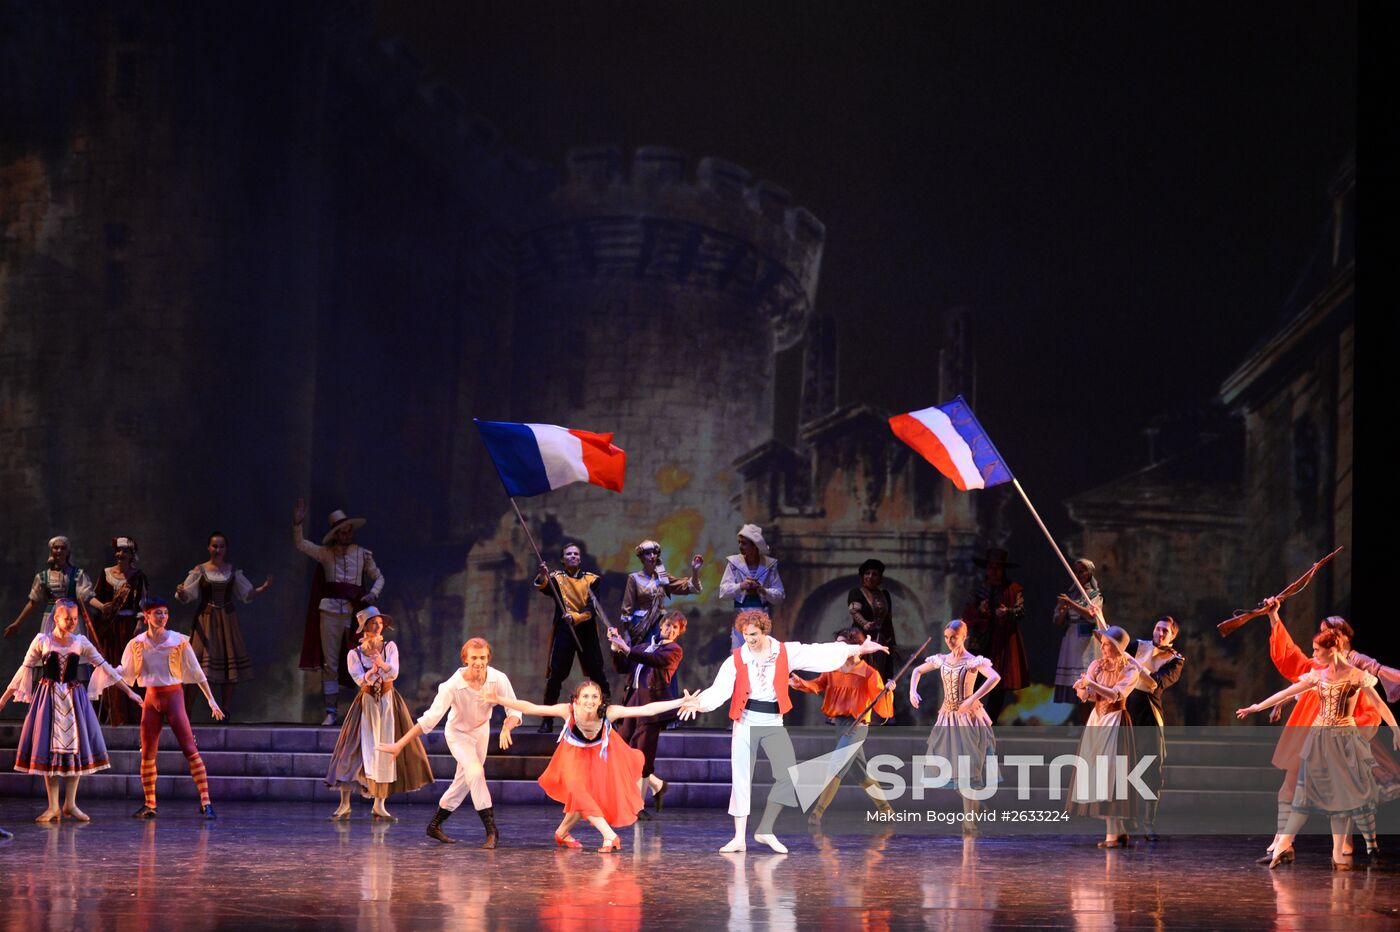 Gala concert at 27th Rudolph Nureyev International Classical Ballet Festival